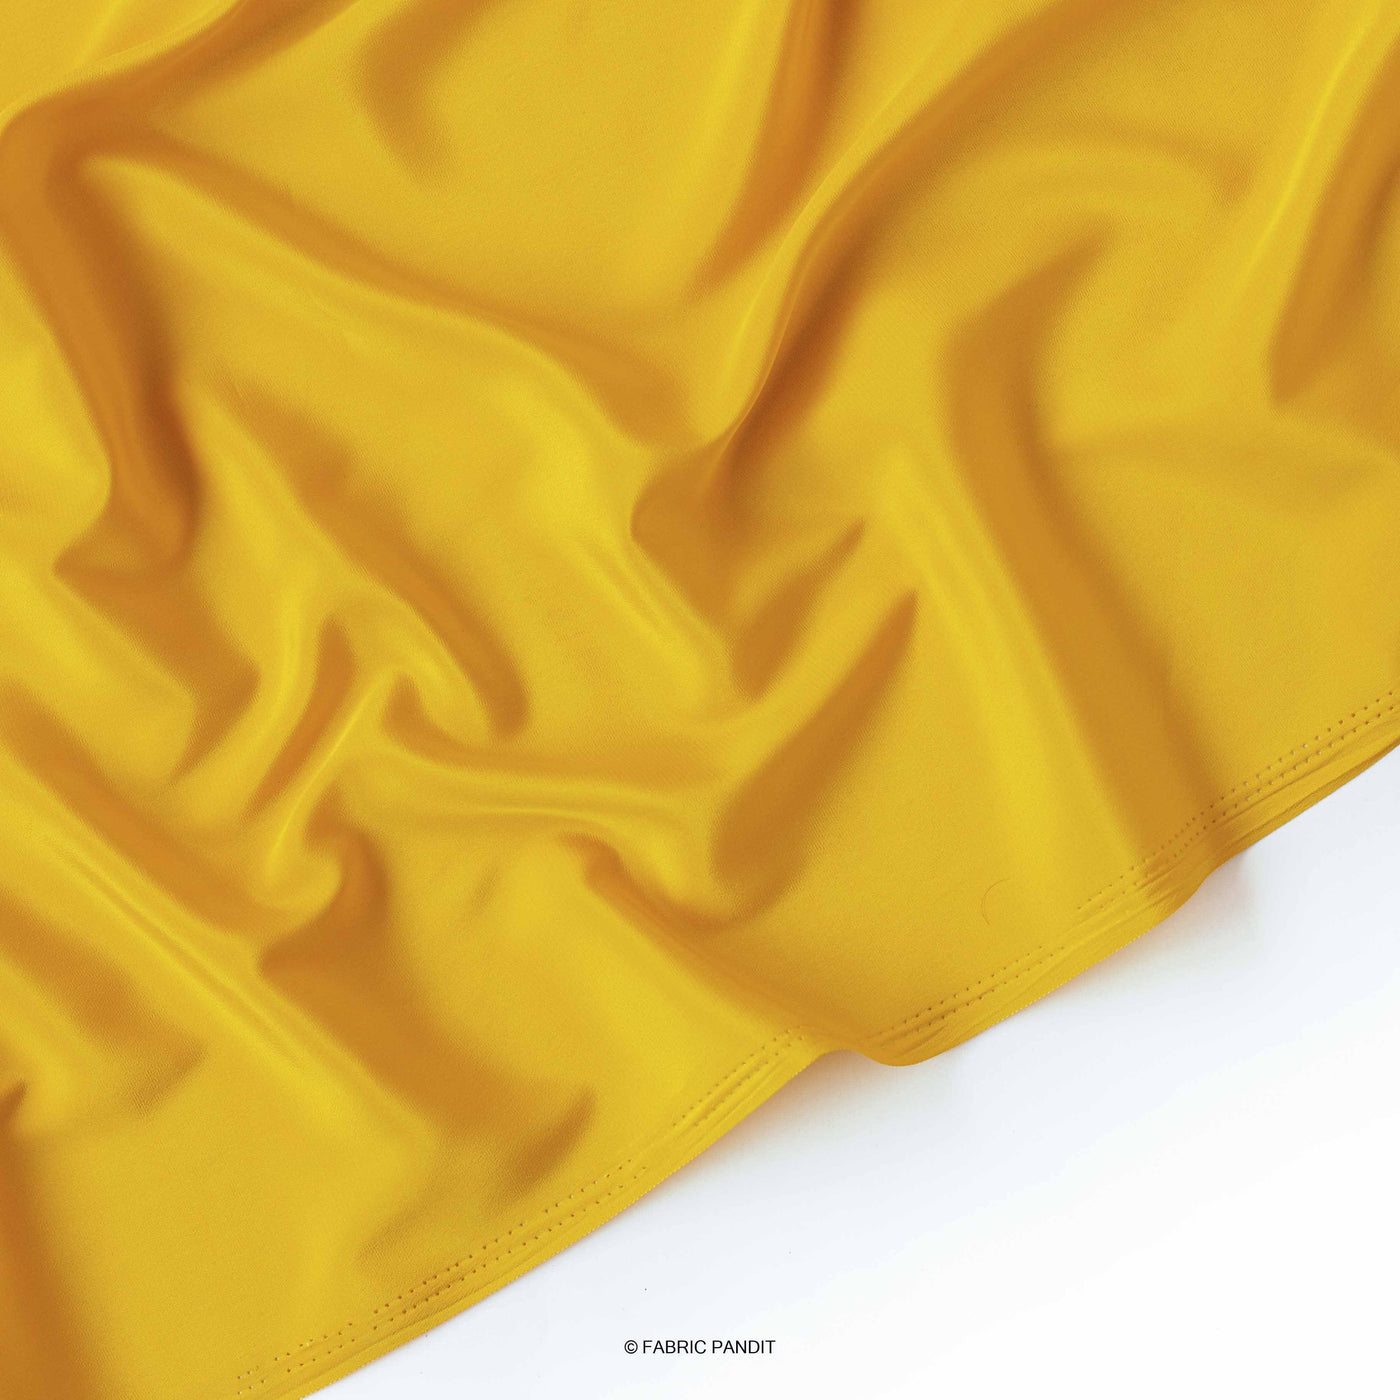 Fabric Pandit Fabric Honey Yellow Premium French Crepe Fabric (Width 44 Inches)